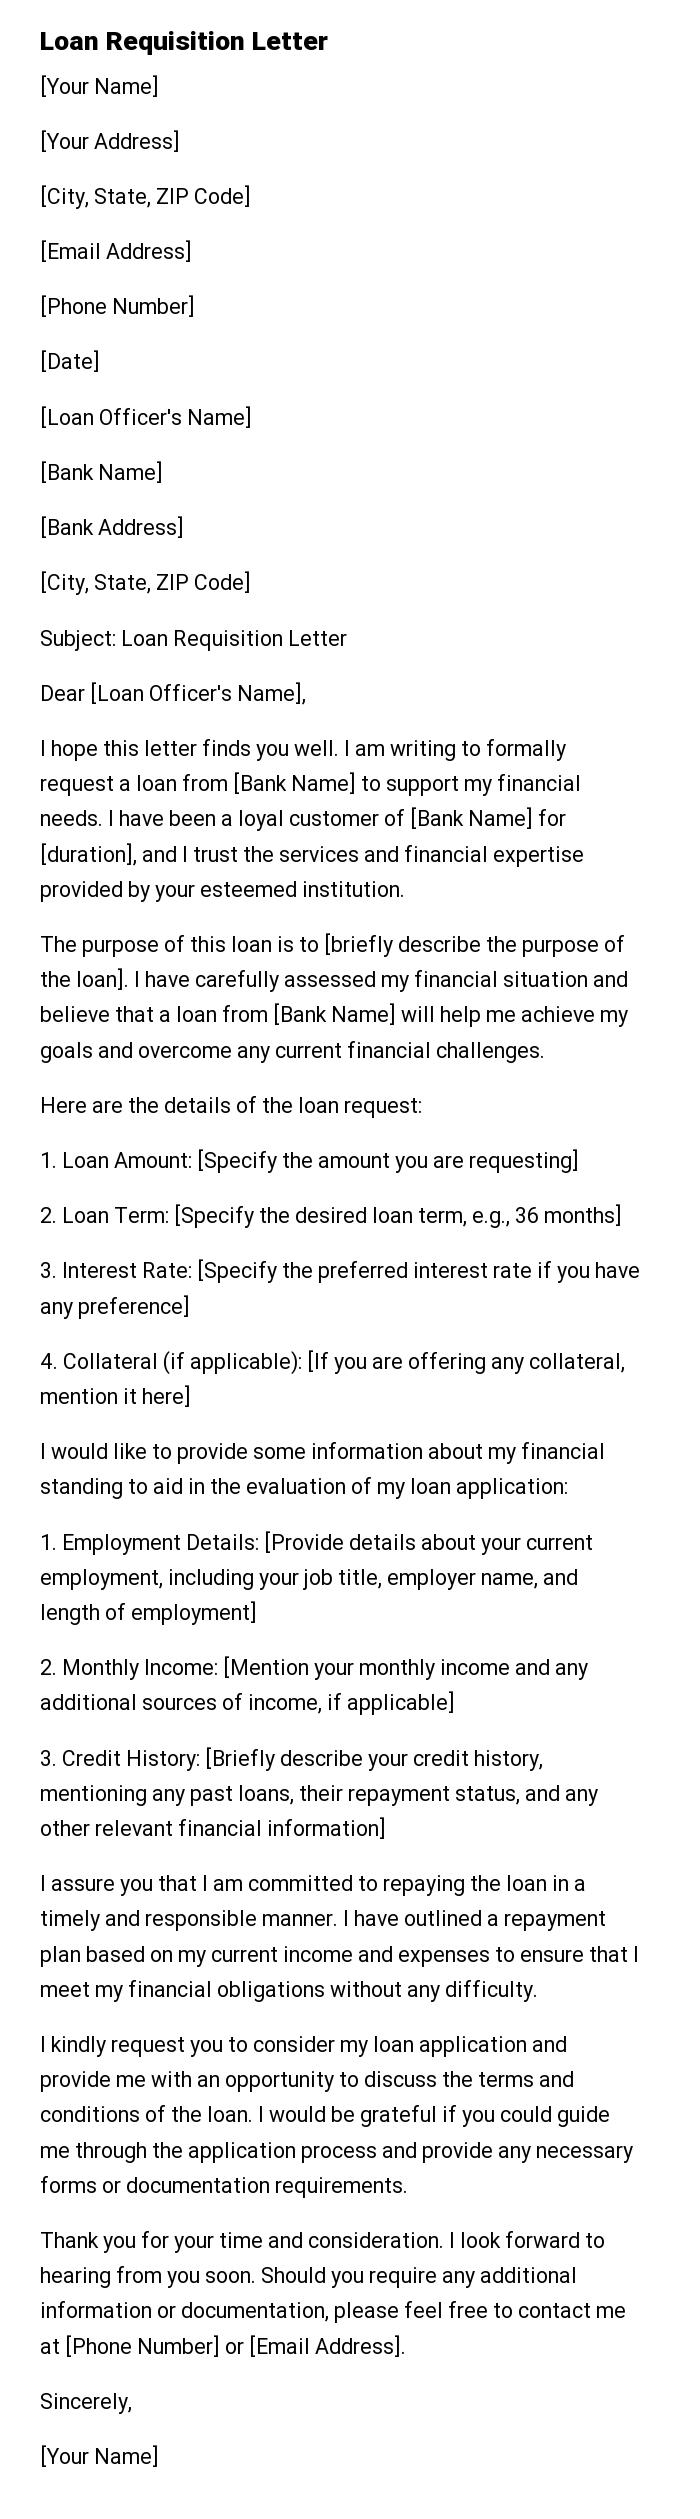 Loan Requisition Letter